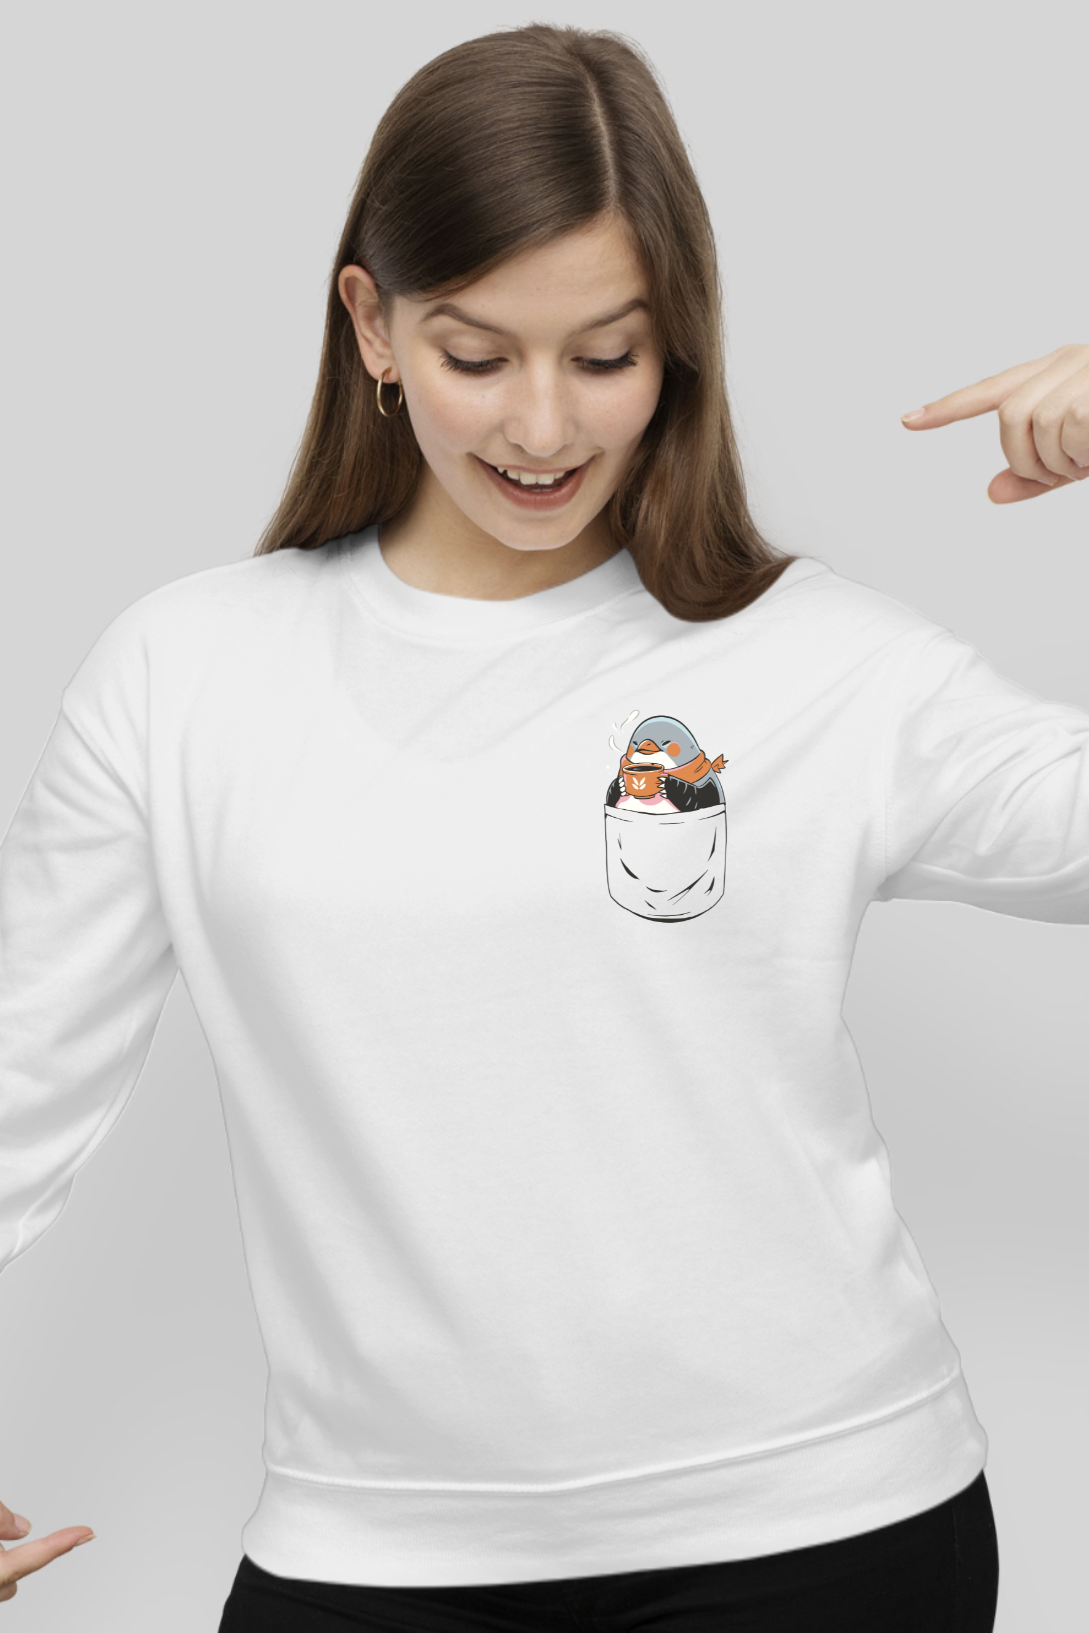 Penguin In Pocket White Printed Sweatshirt For Women - WowWaves - 2